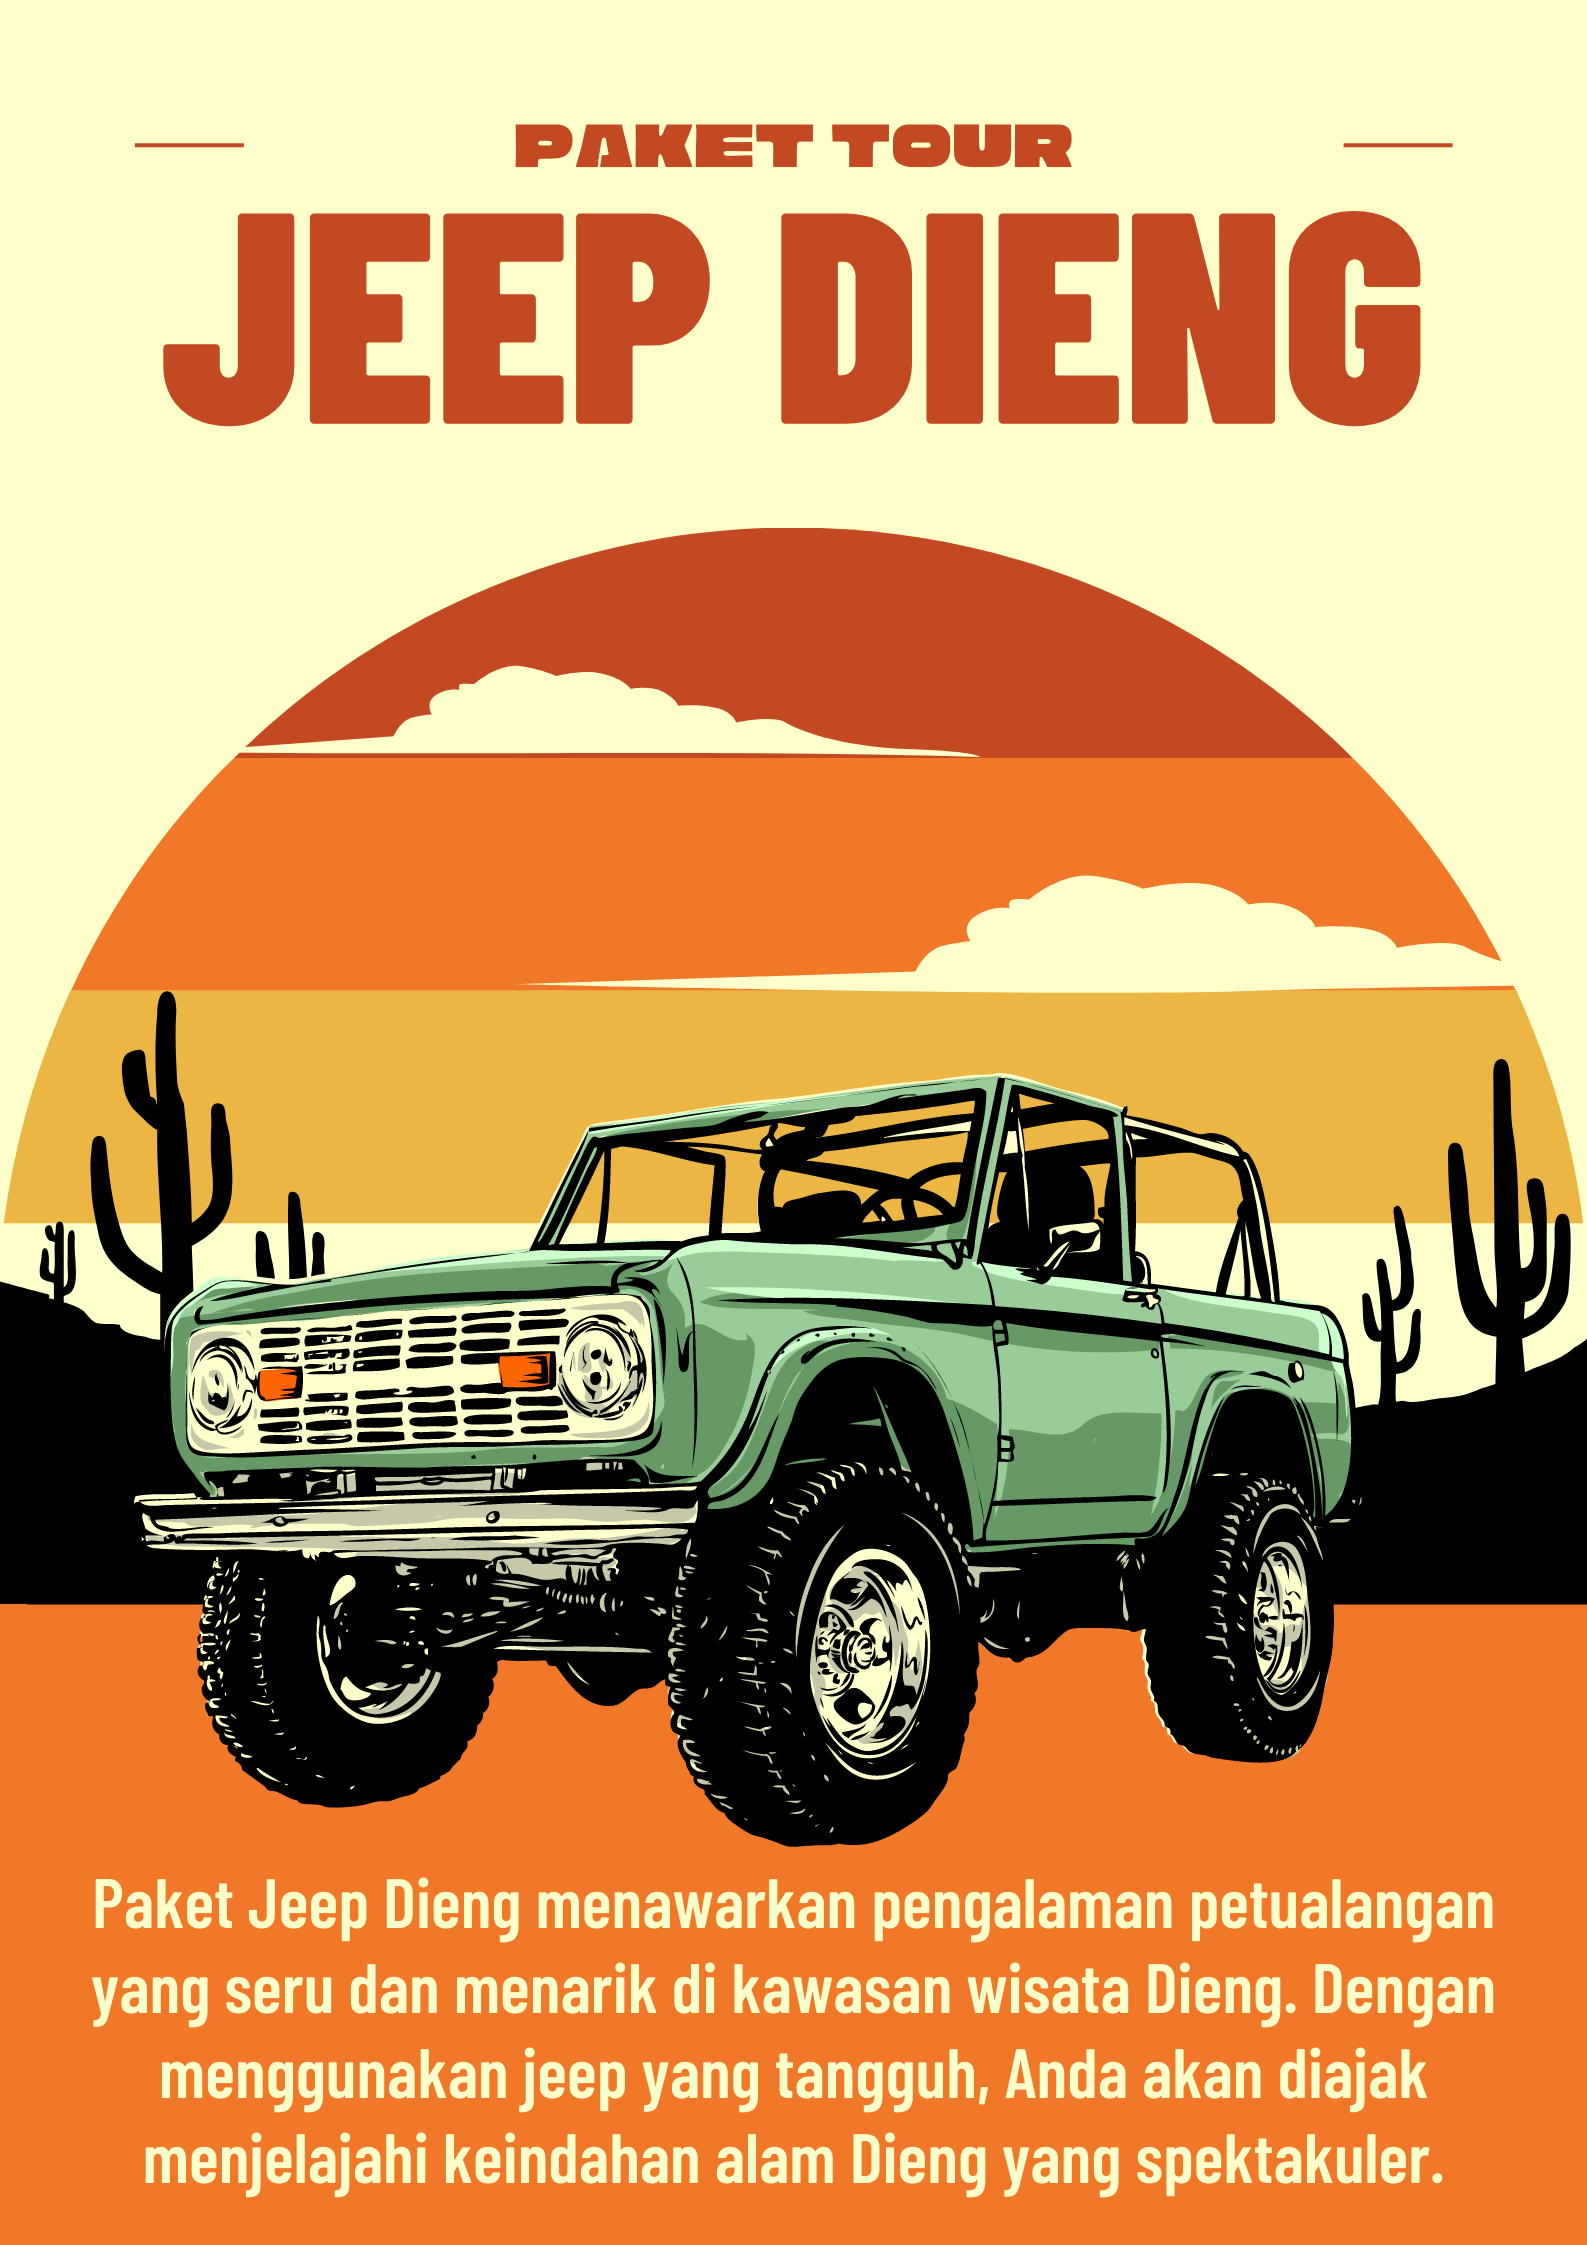 Paket Jeep Dieng